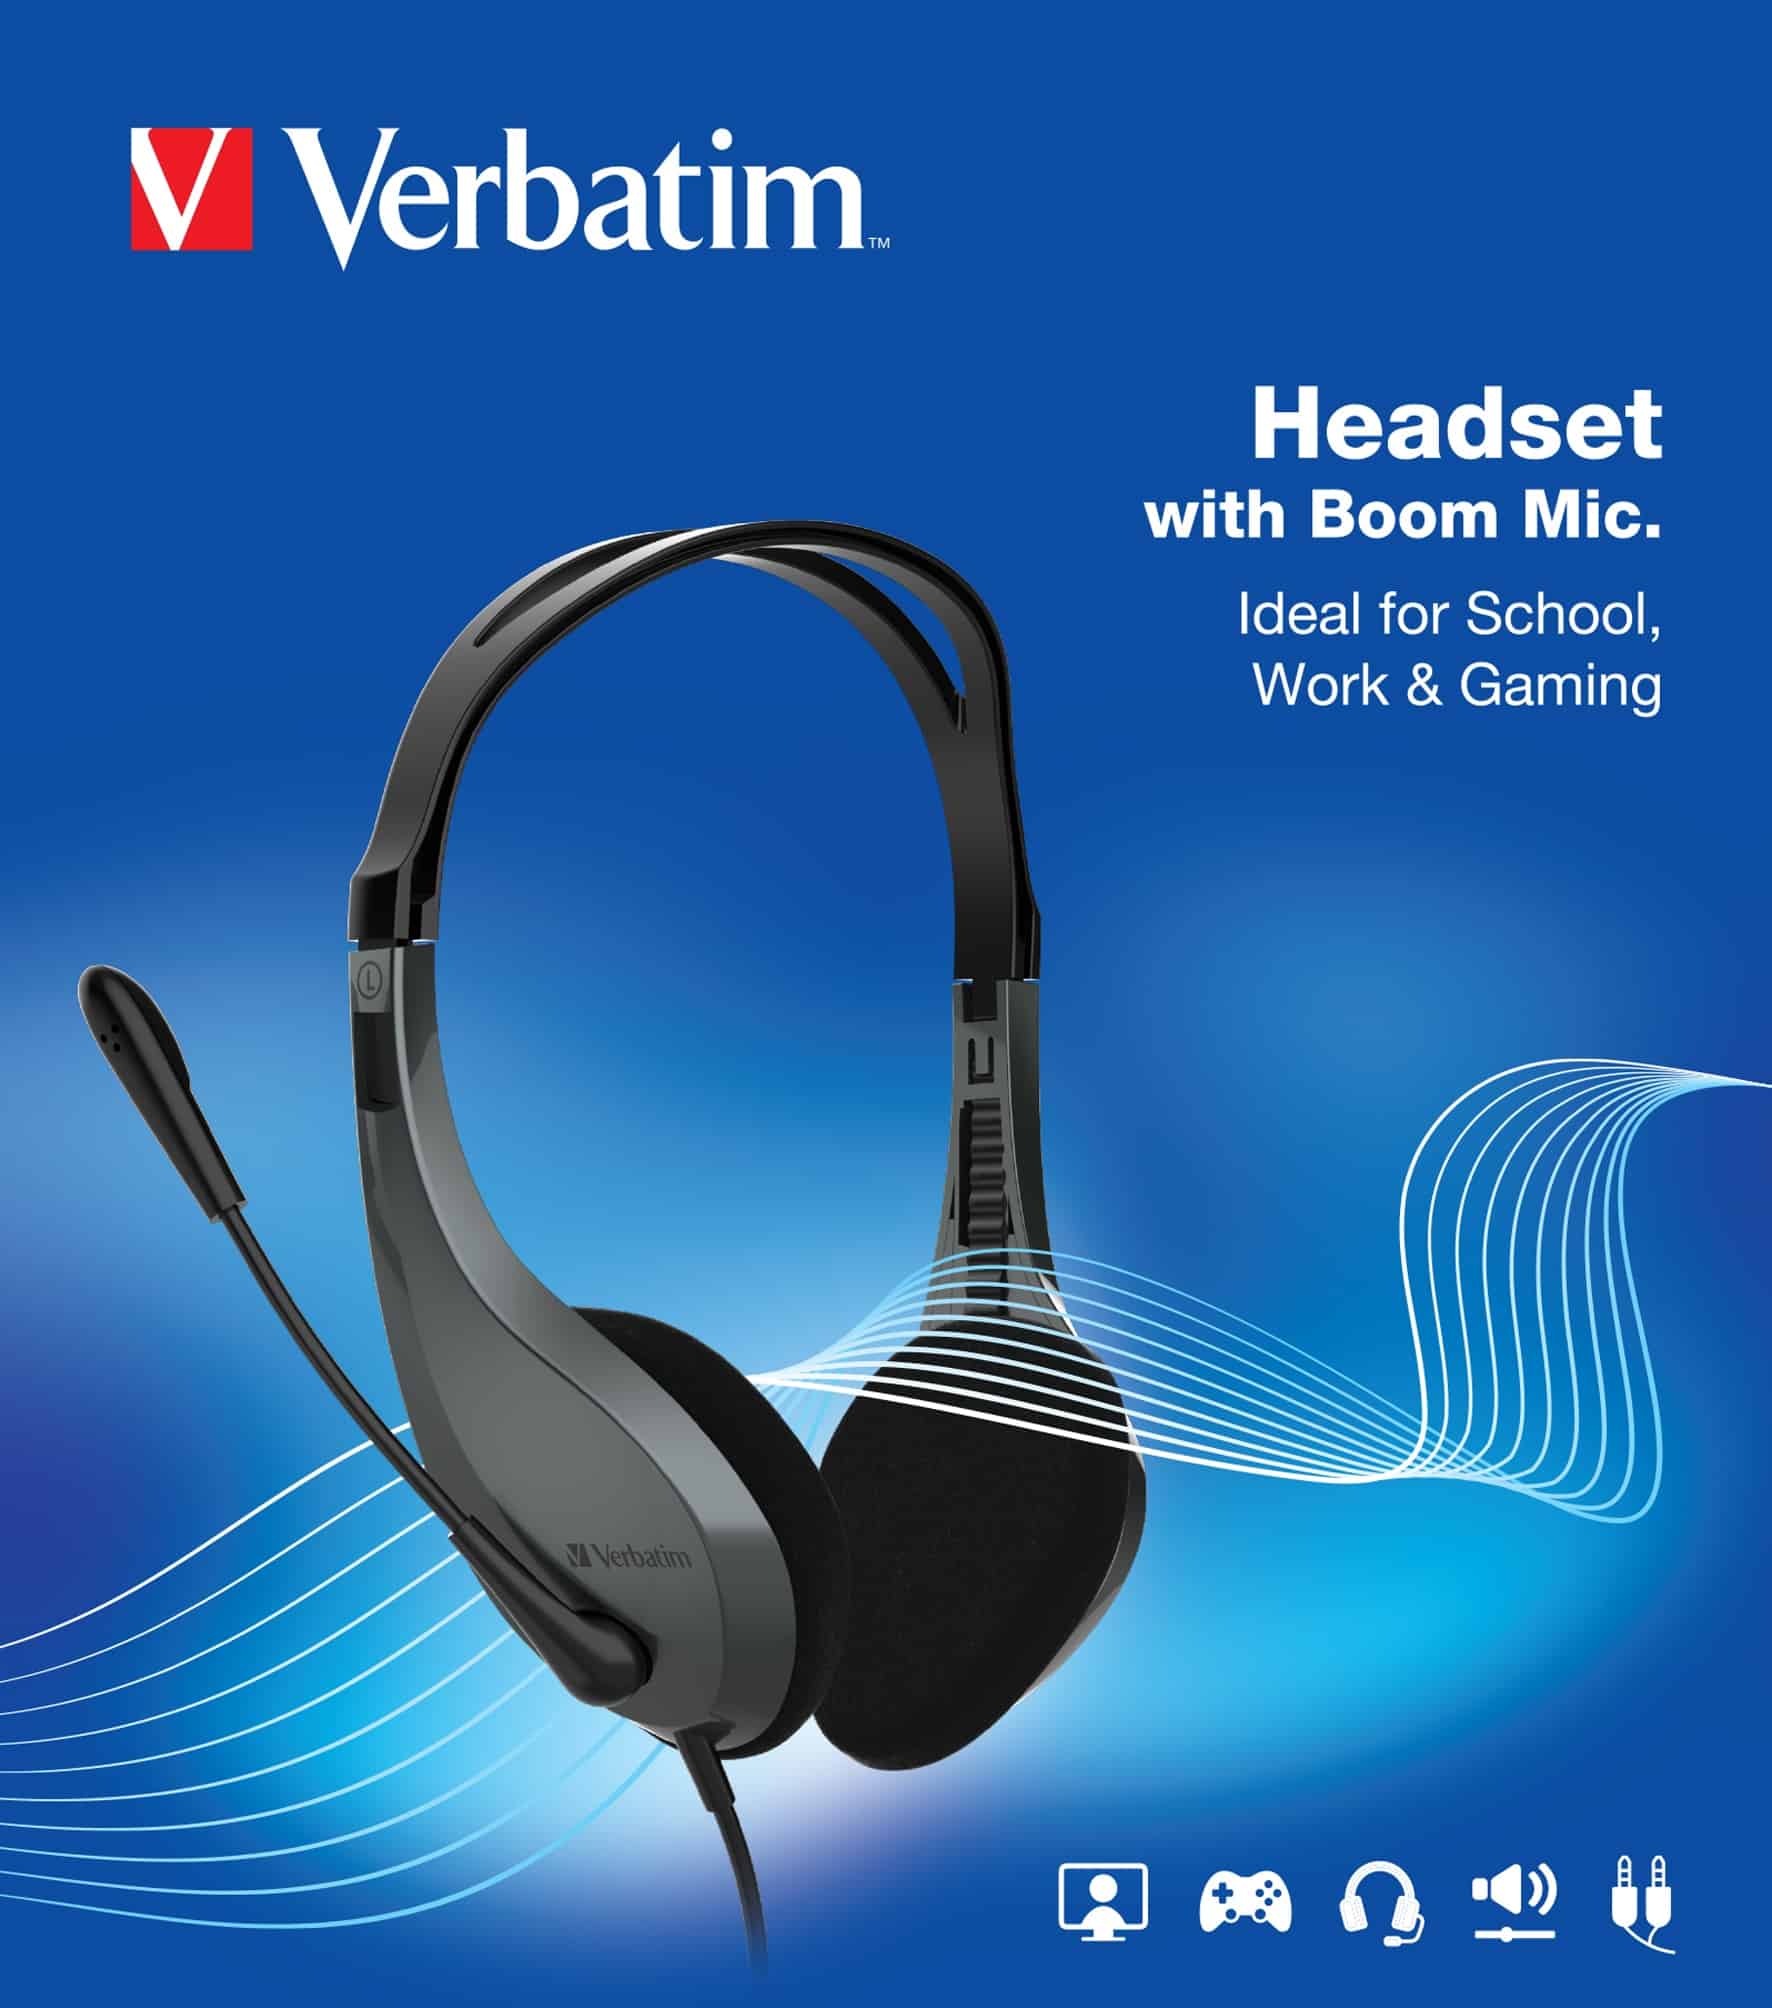 Verbatim Headset with Microphone